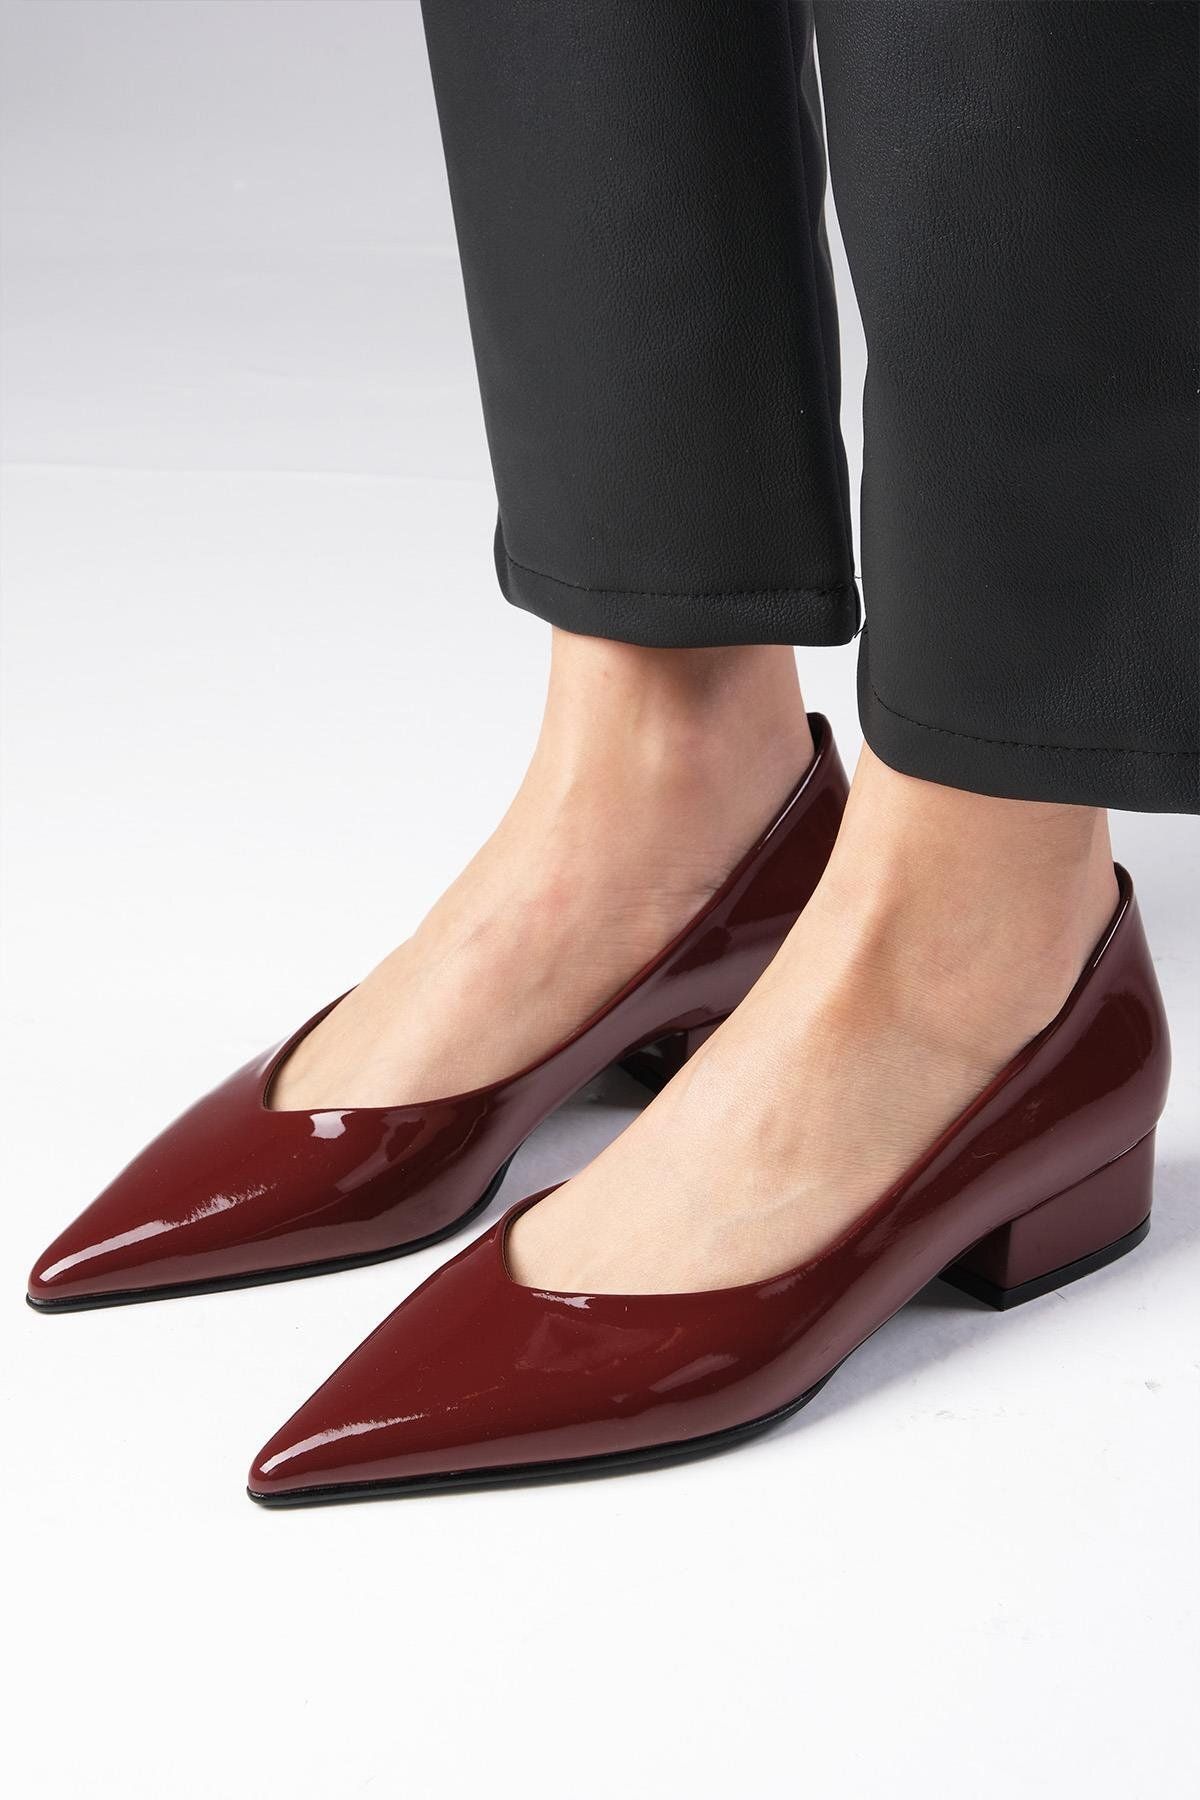 Mio Gusto Marie Bordo Renk Rugan Kısa Topuklu Kadın Ayakkabı